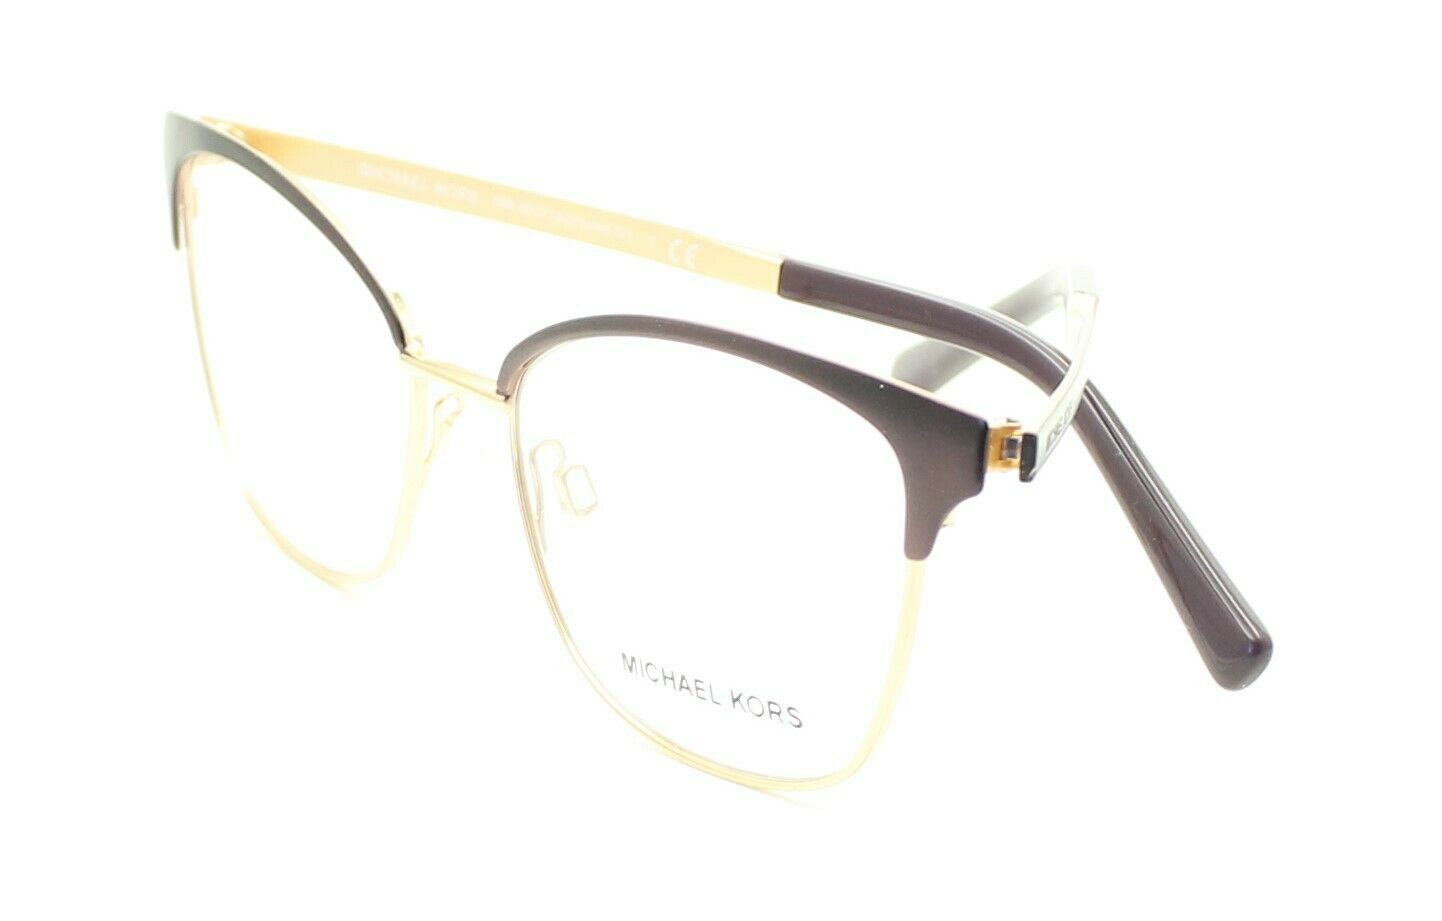 MICHAEL KORS MK 3012 1108 (Adrianna IV) Eyewear FRAMES RX Optical Glasses -  New - GGV Eyewear